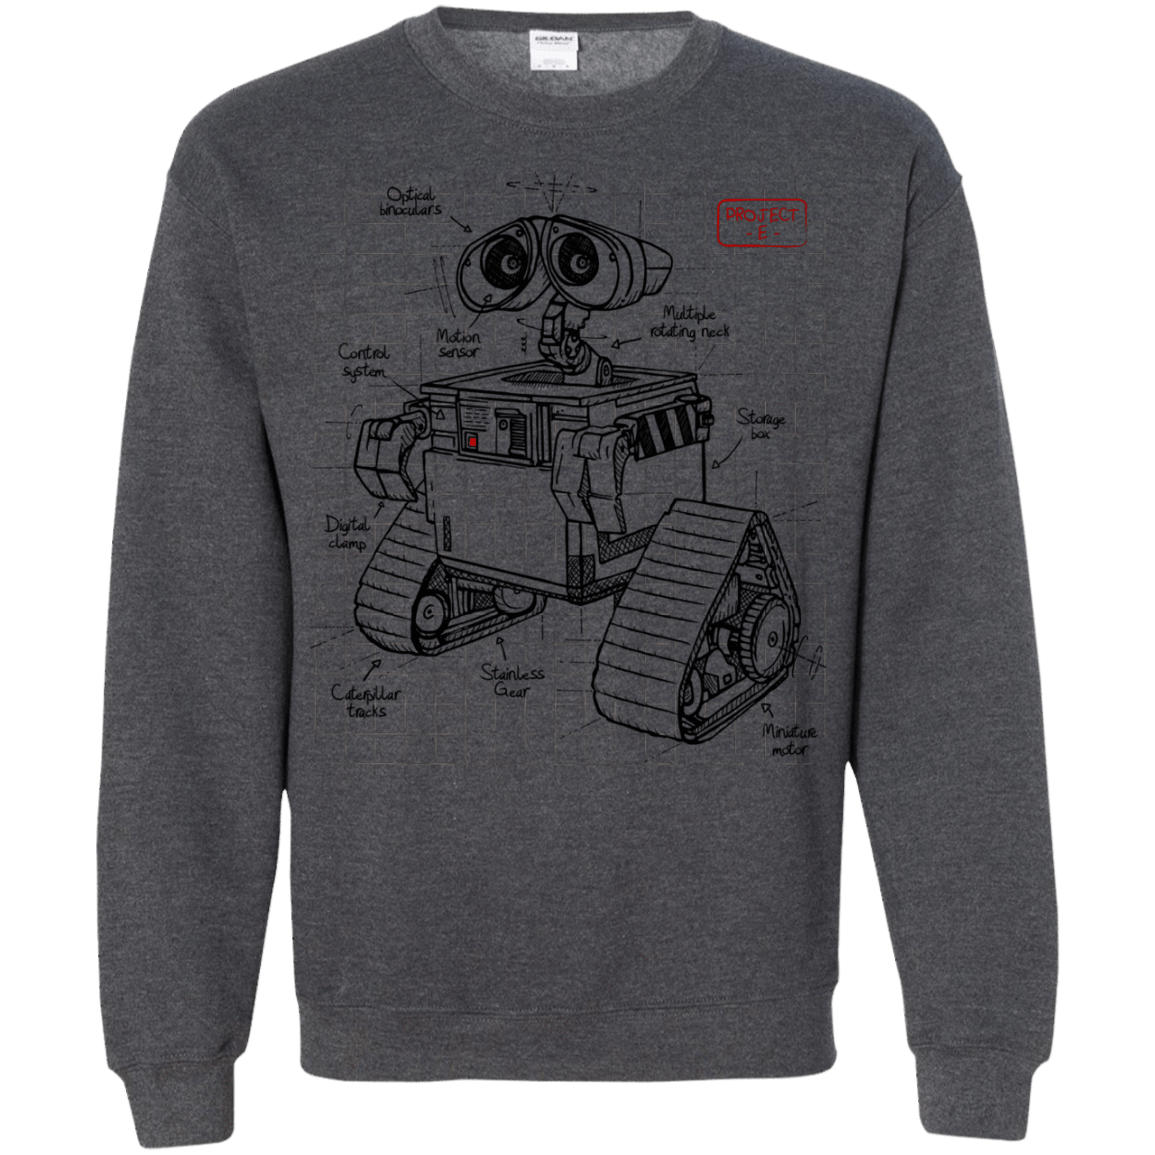 Sweatshirts Dark Heather / S WALL-E Plan Crewneck Sweatshirt